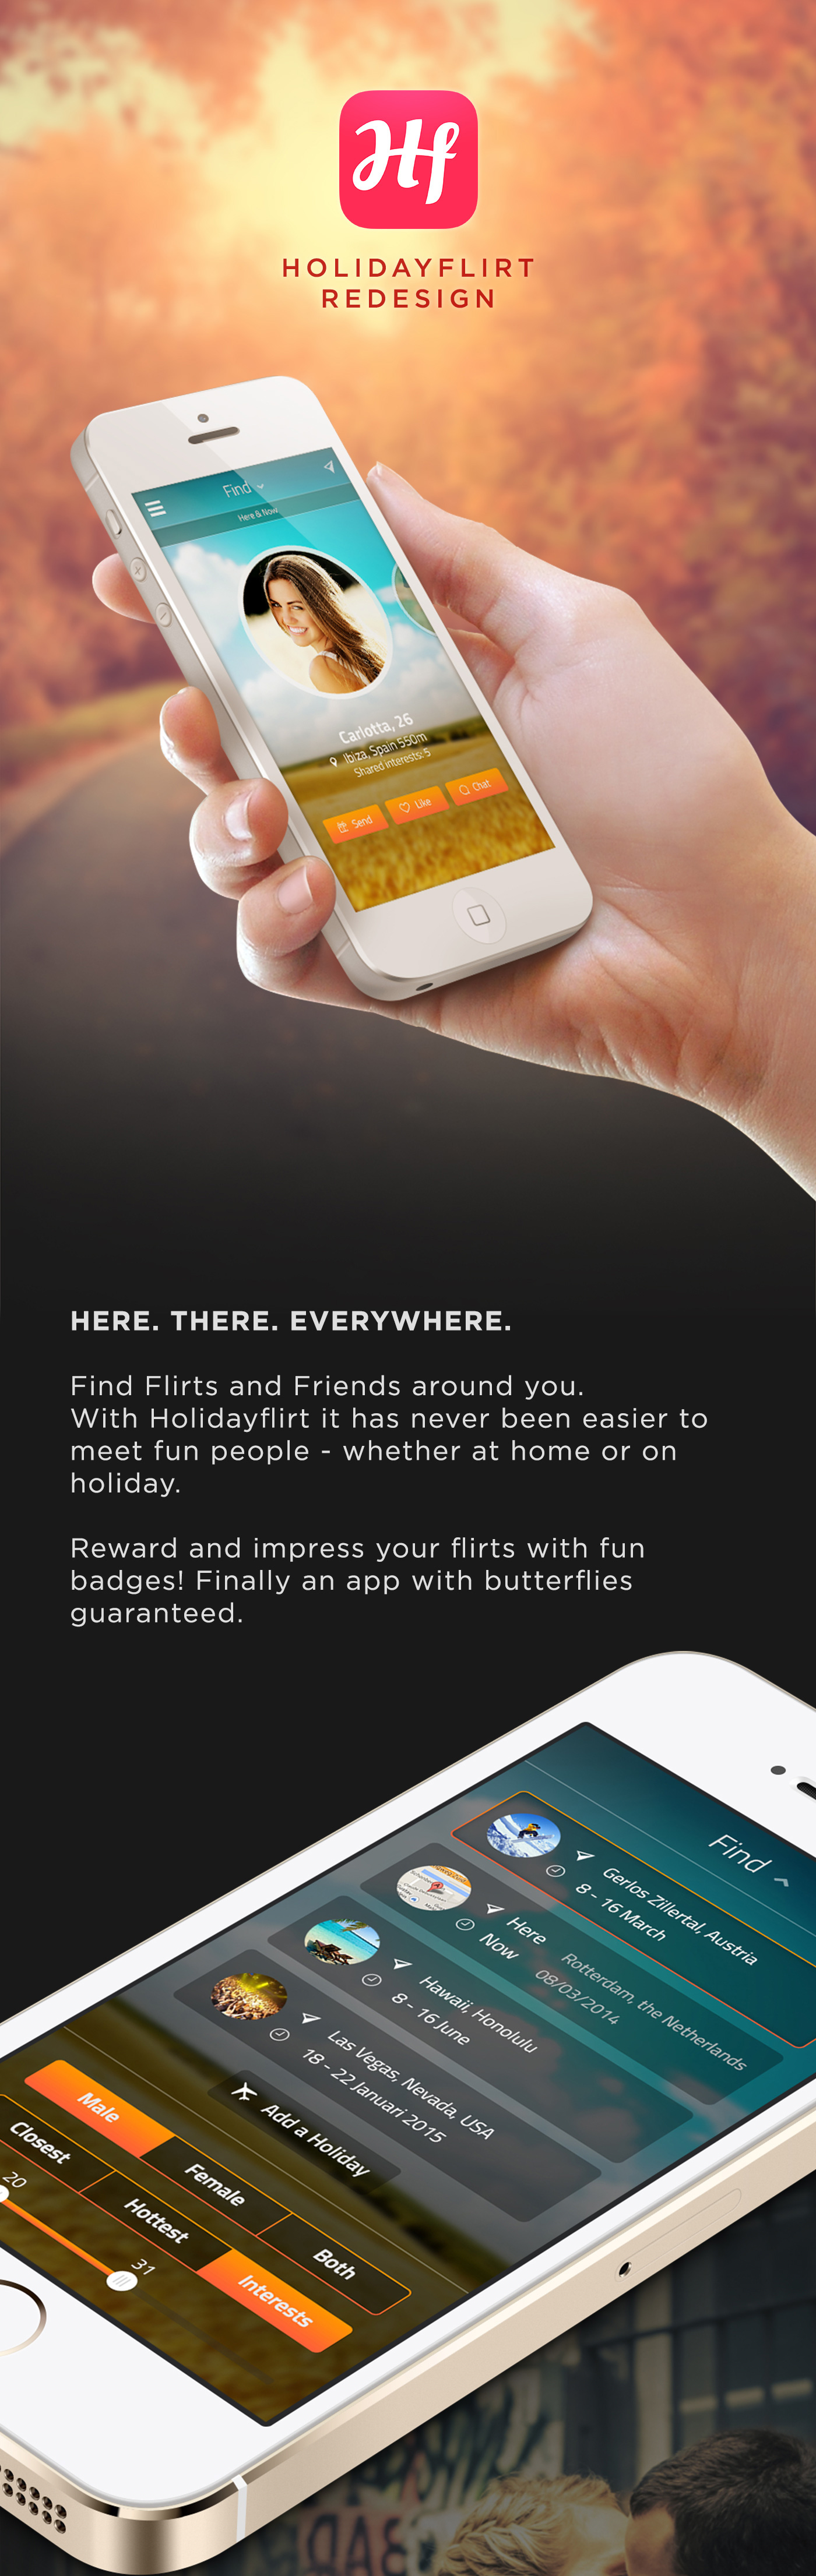 app Holiday flirt holidayflirt ux UI iphone profile page design Ronald Hagenstein